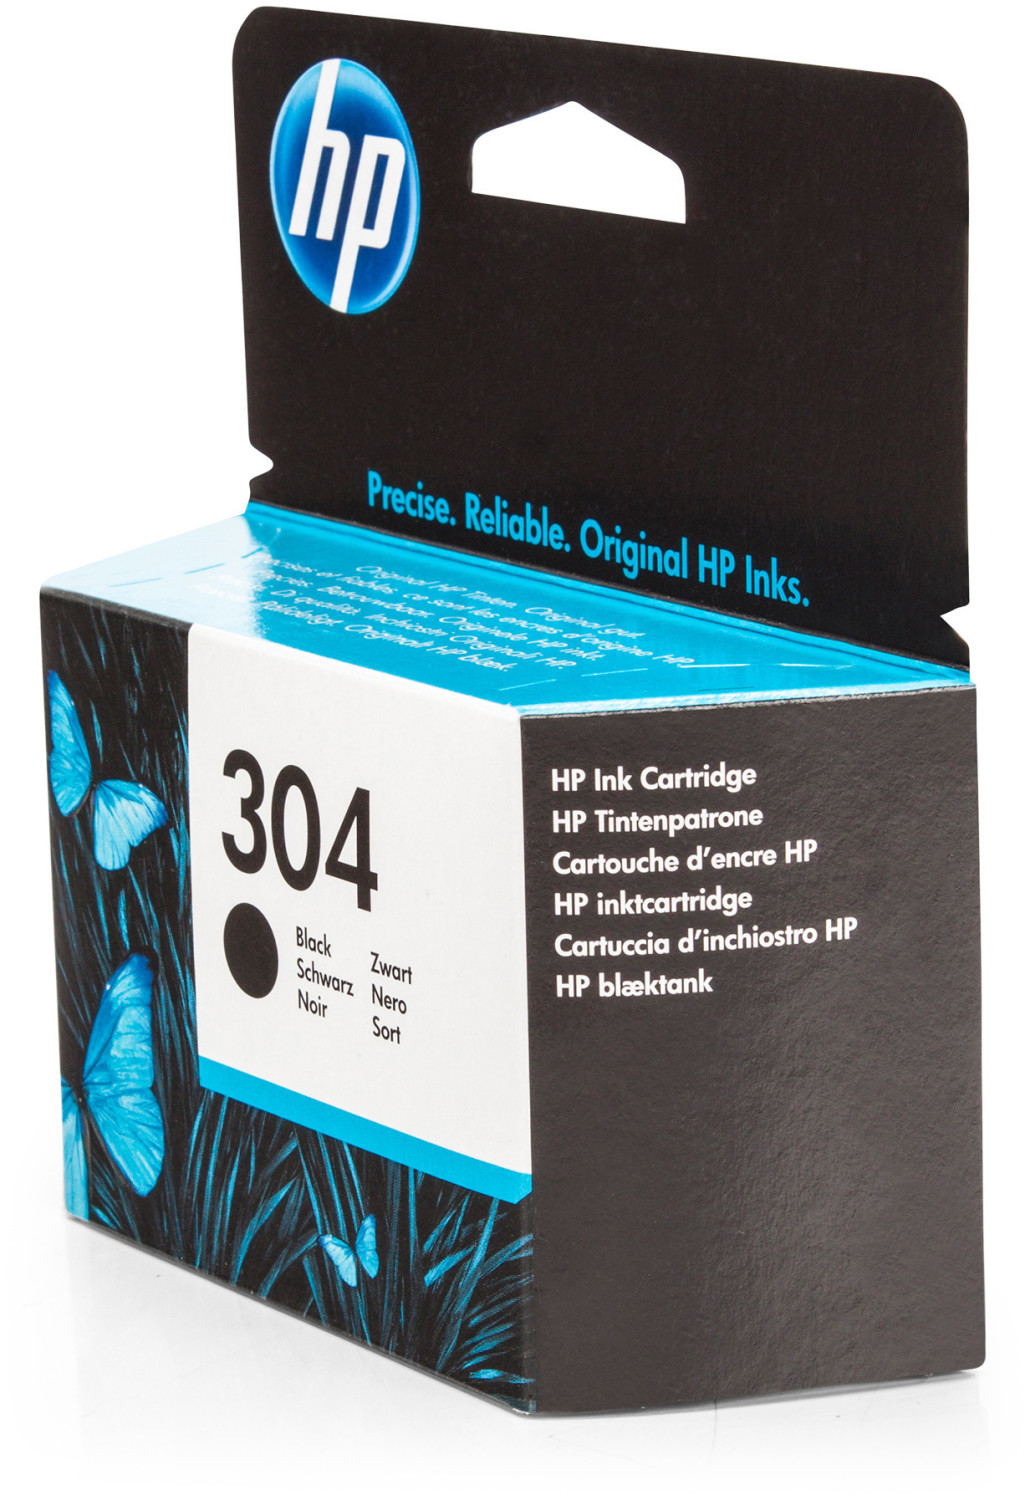 cartouche HP 304 noir - HEMA